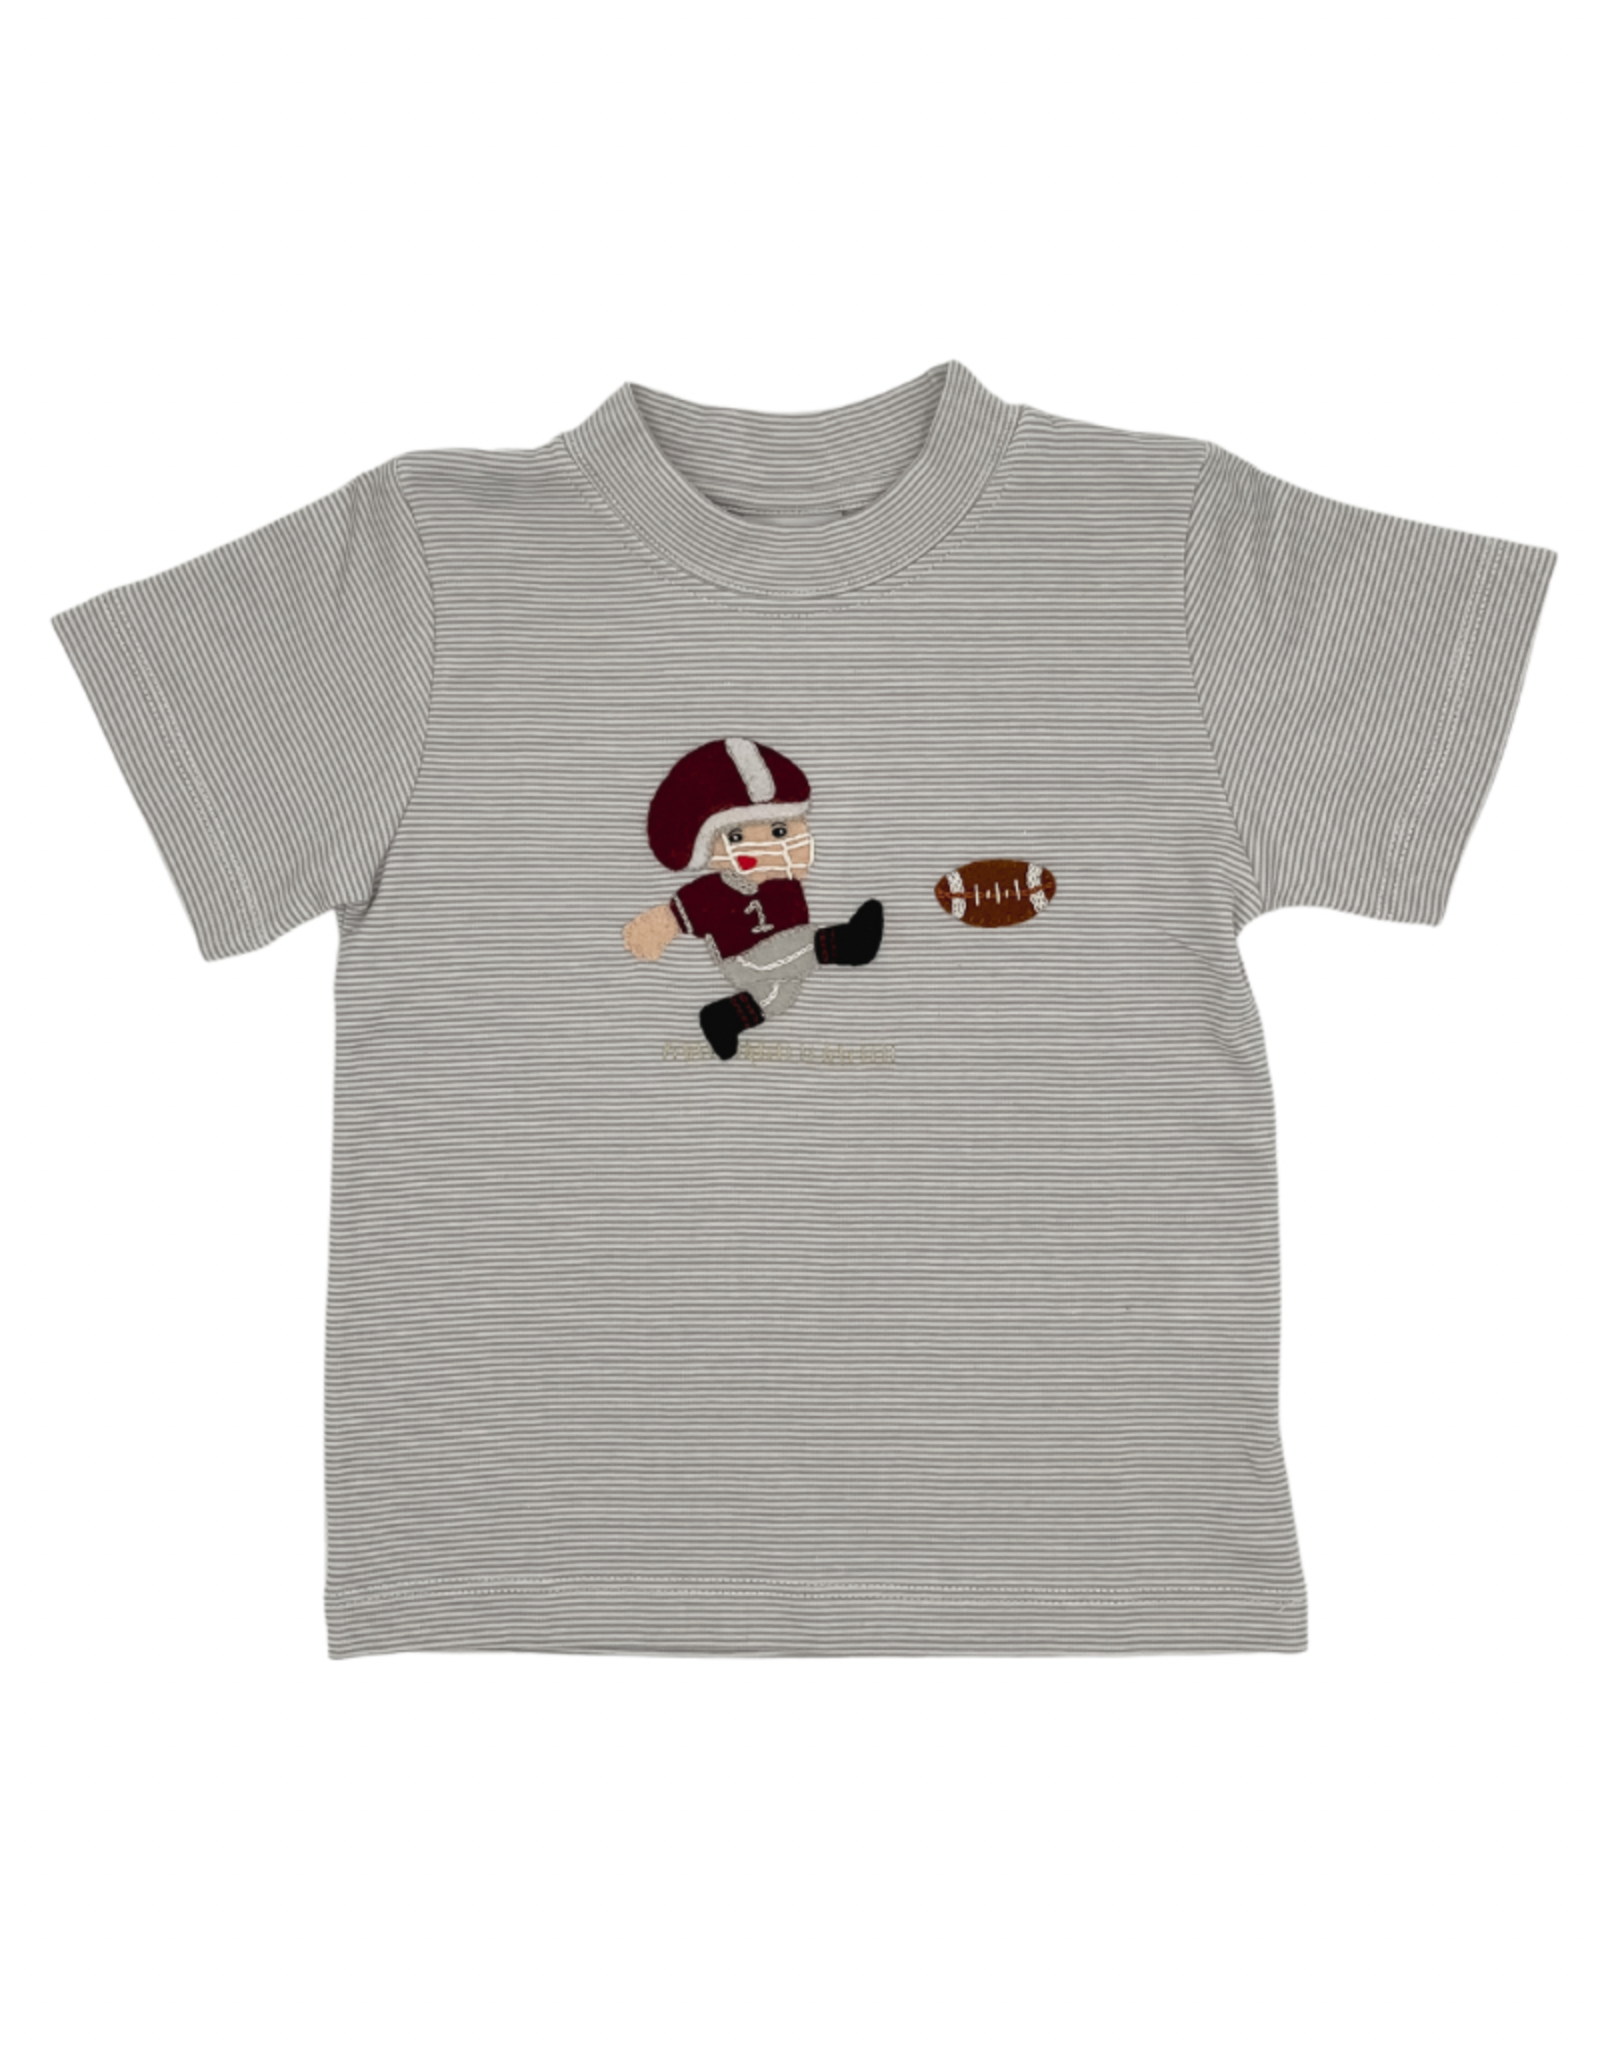 Squiggles Grey Stripe Maroon Football Kicker T-shirt